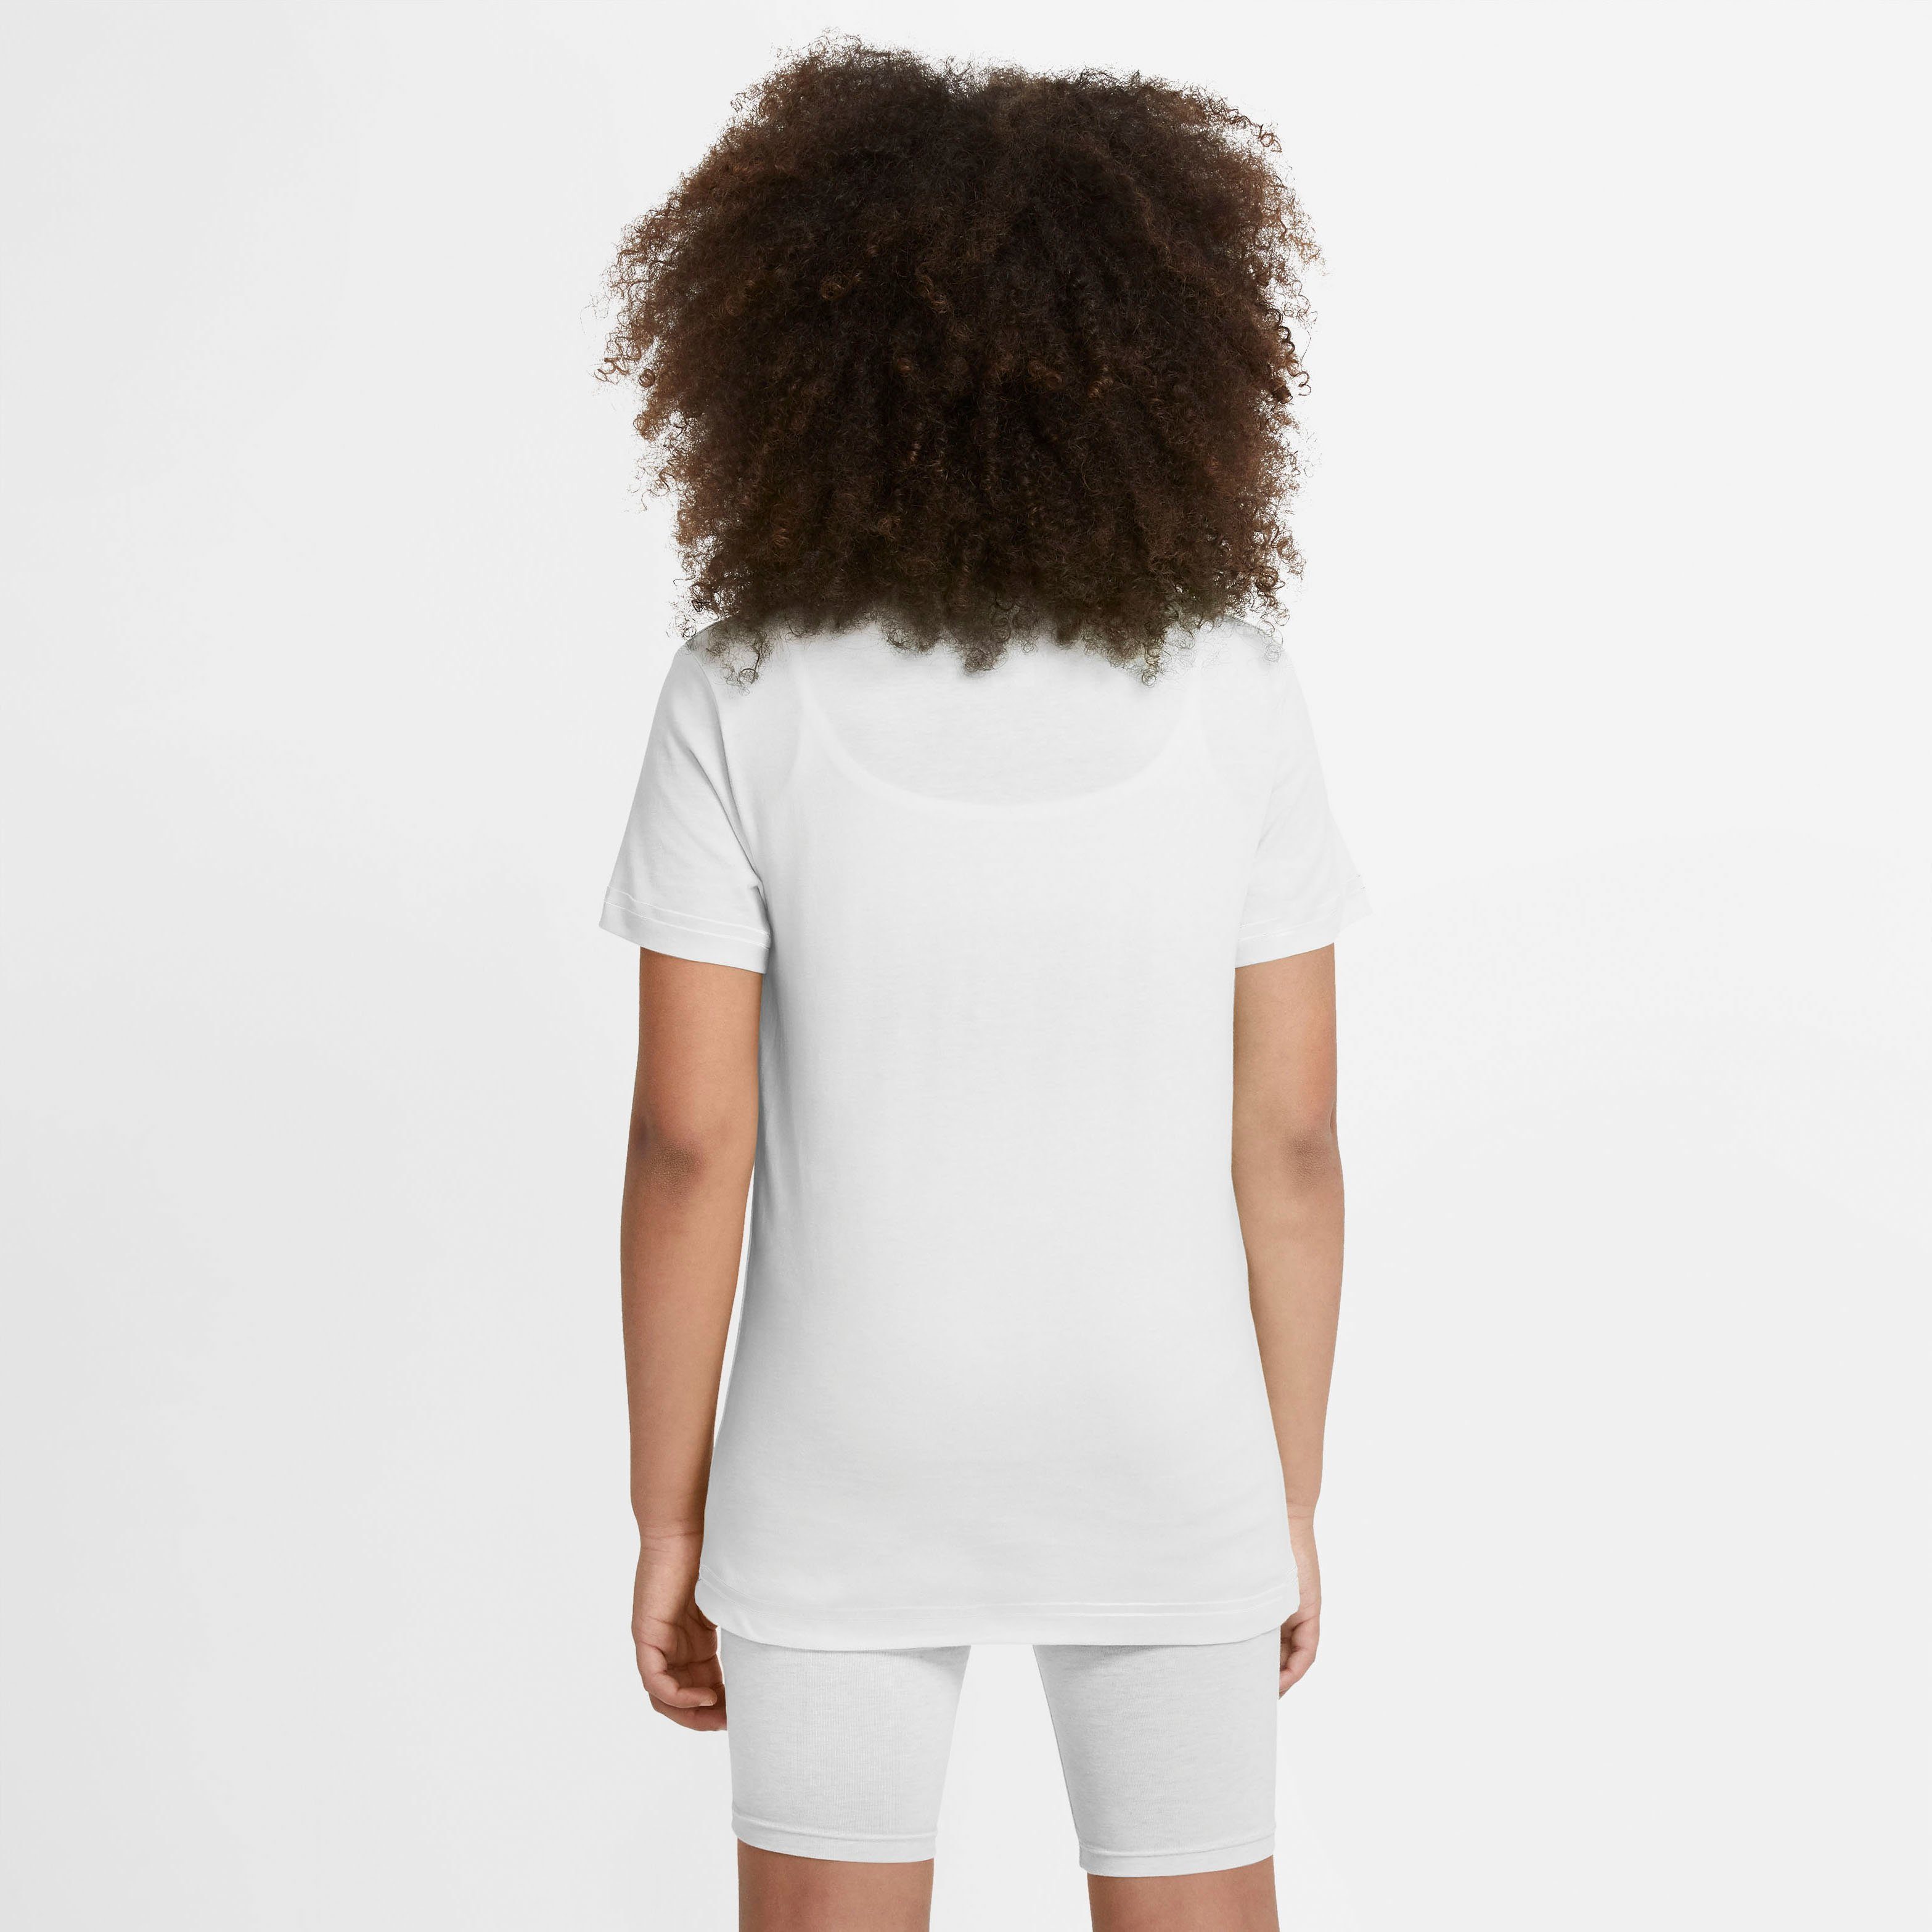 Nike Sportswear T-Shirt Big weiß T-Shirt Kids' (Girls)